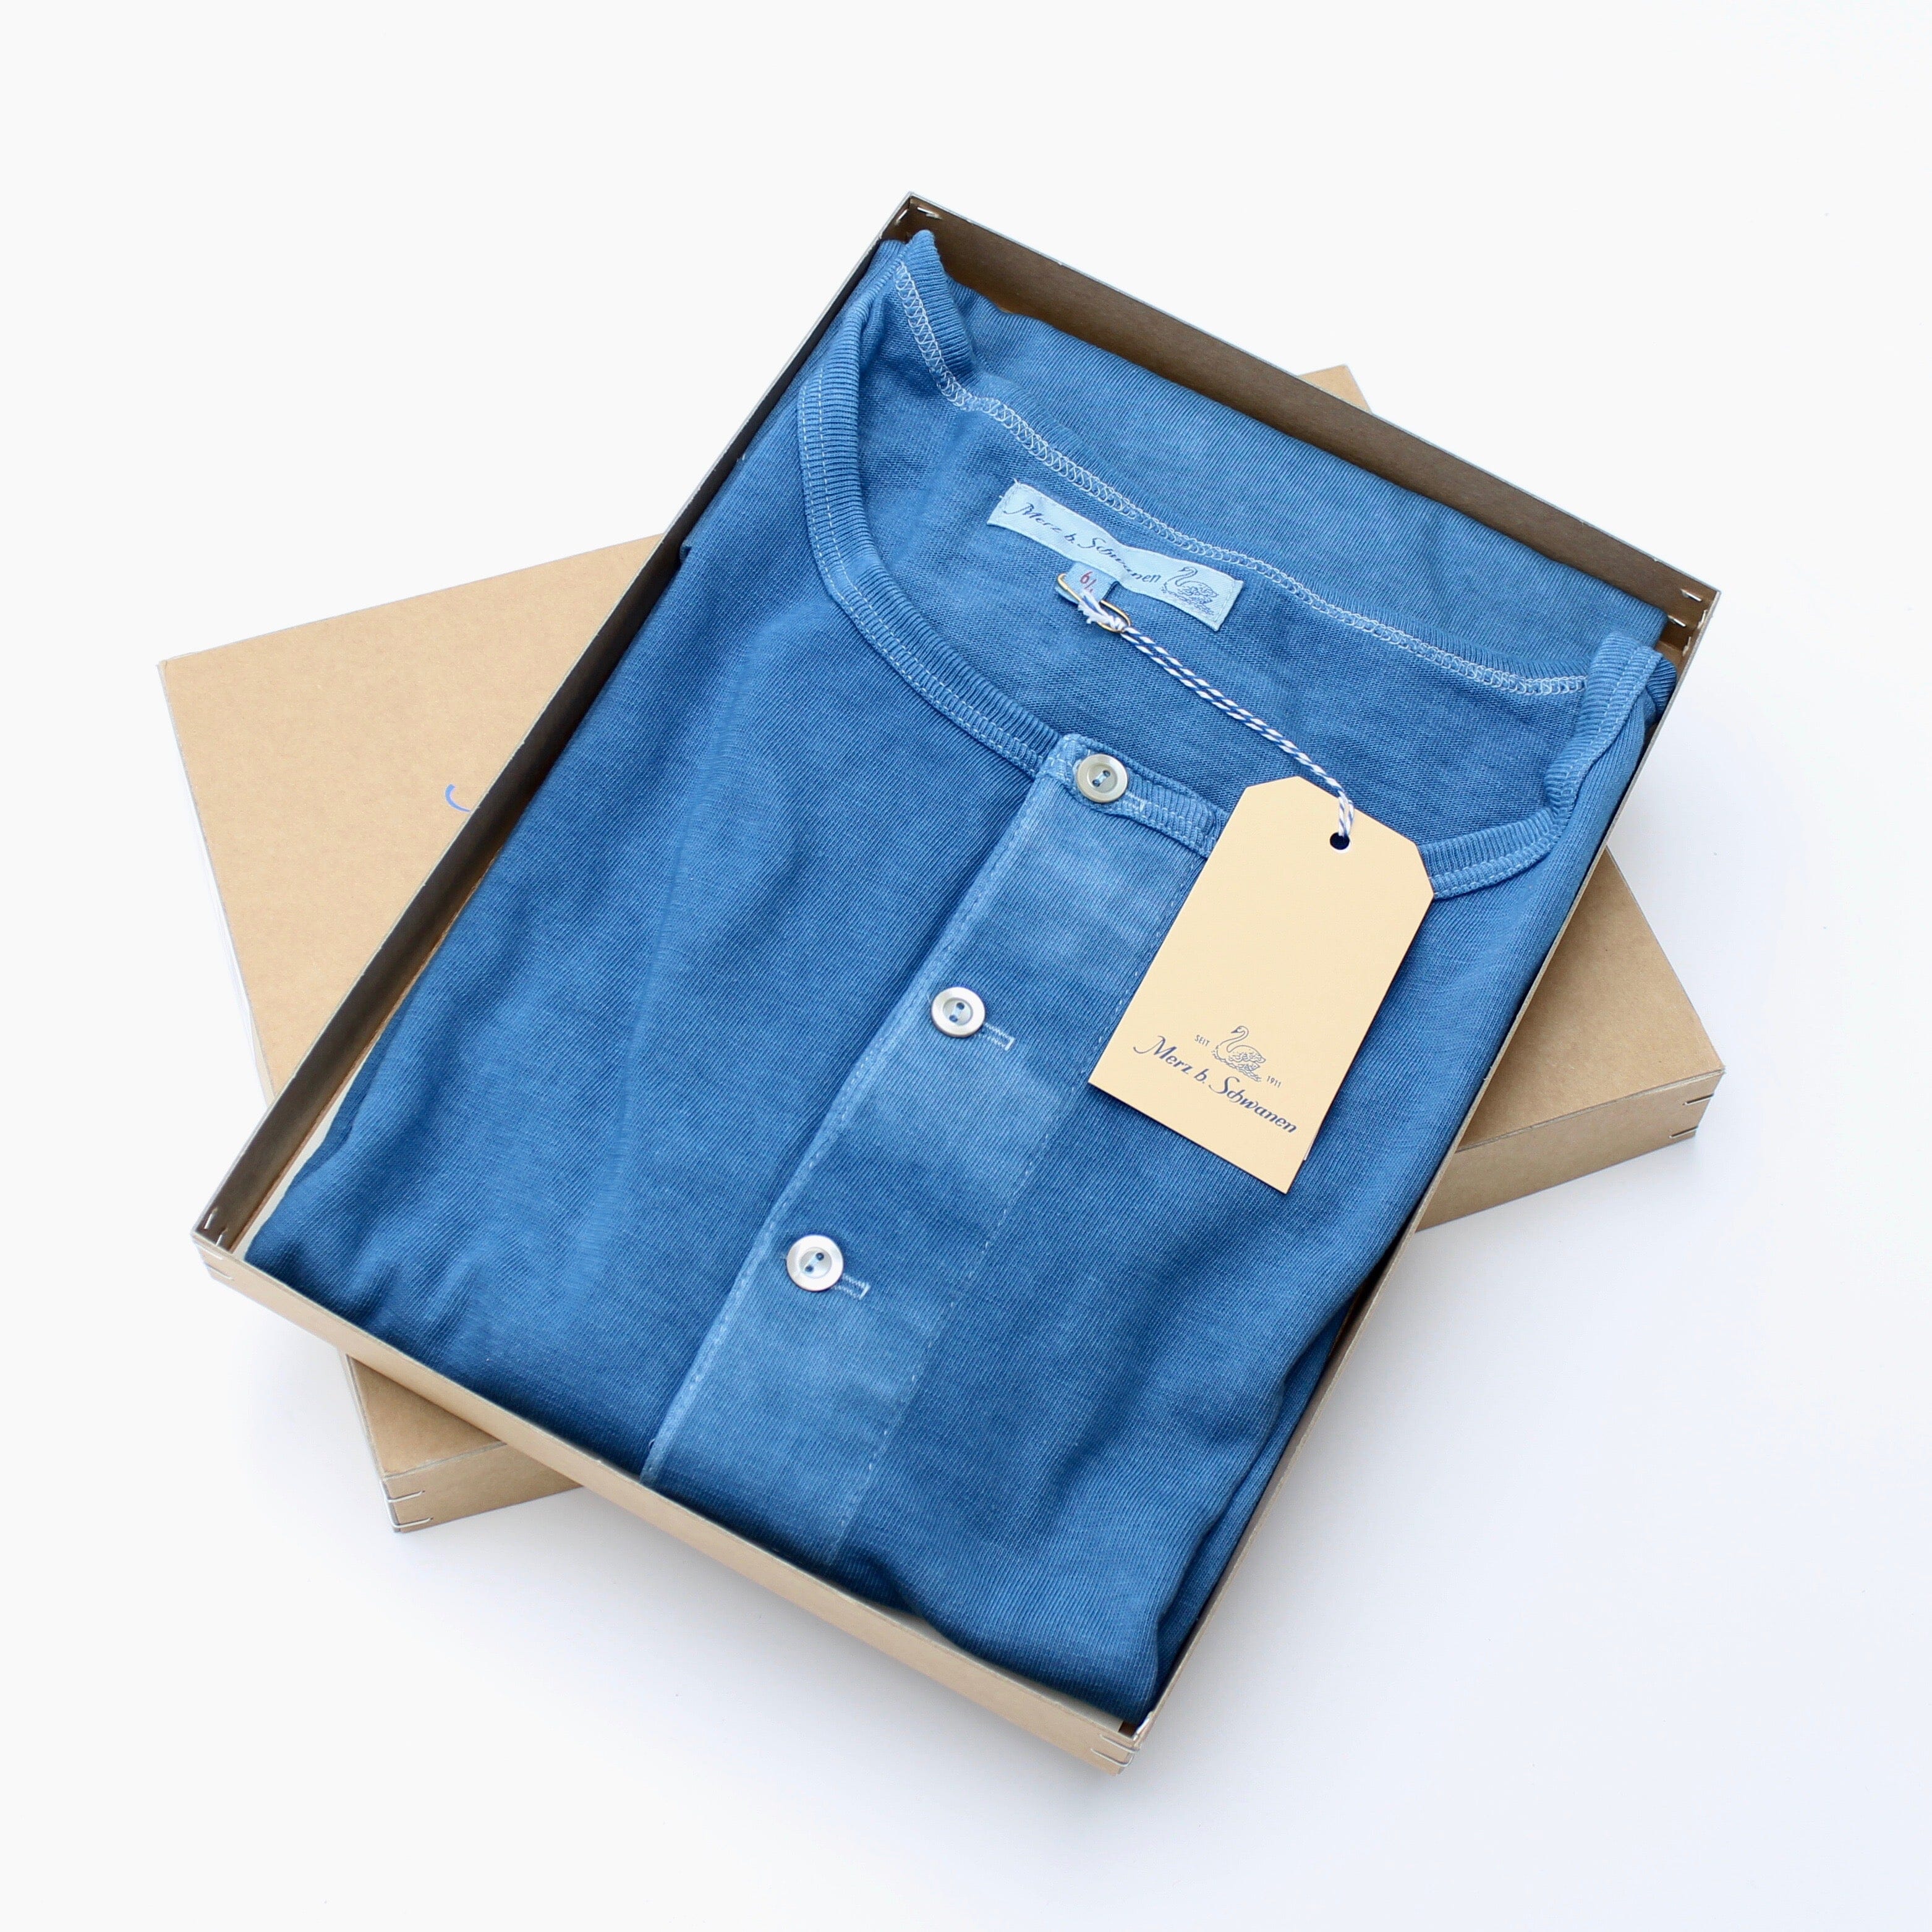 Shirt kurzarm - Farbe indigo Special Edition Atelier Treger 